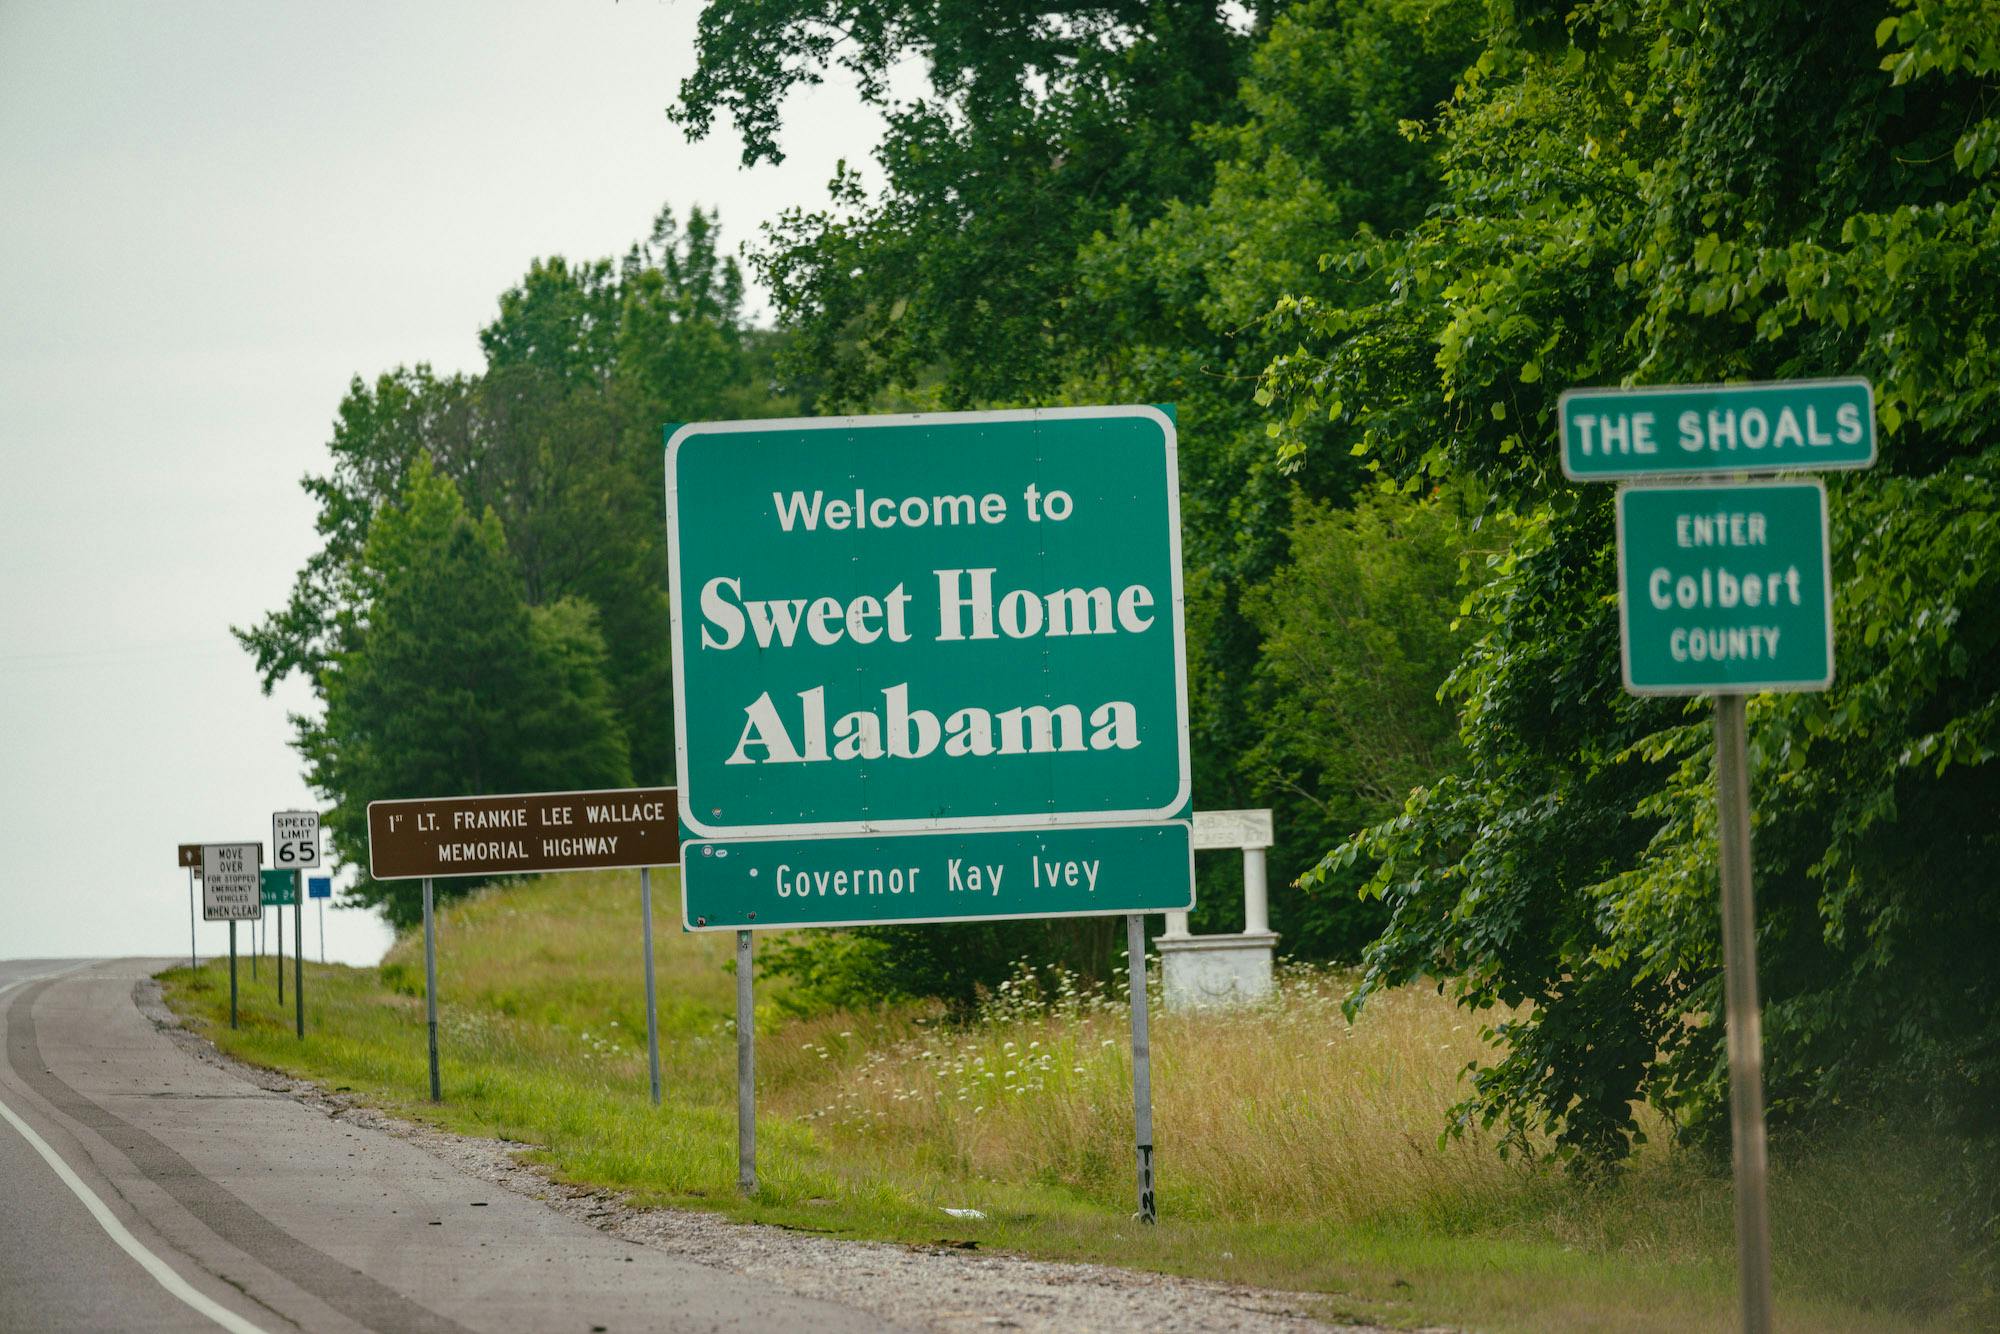 Sweet Home Alabama welcome road sign